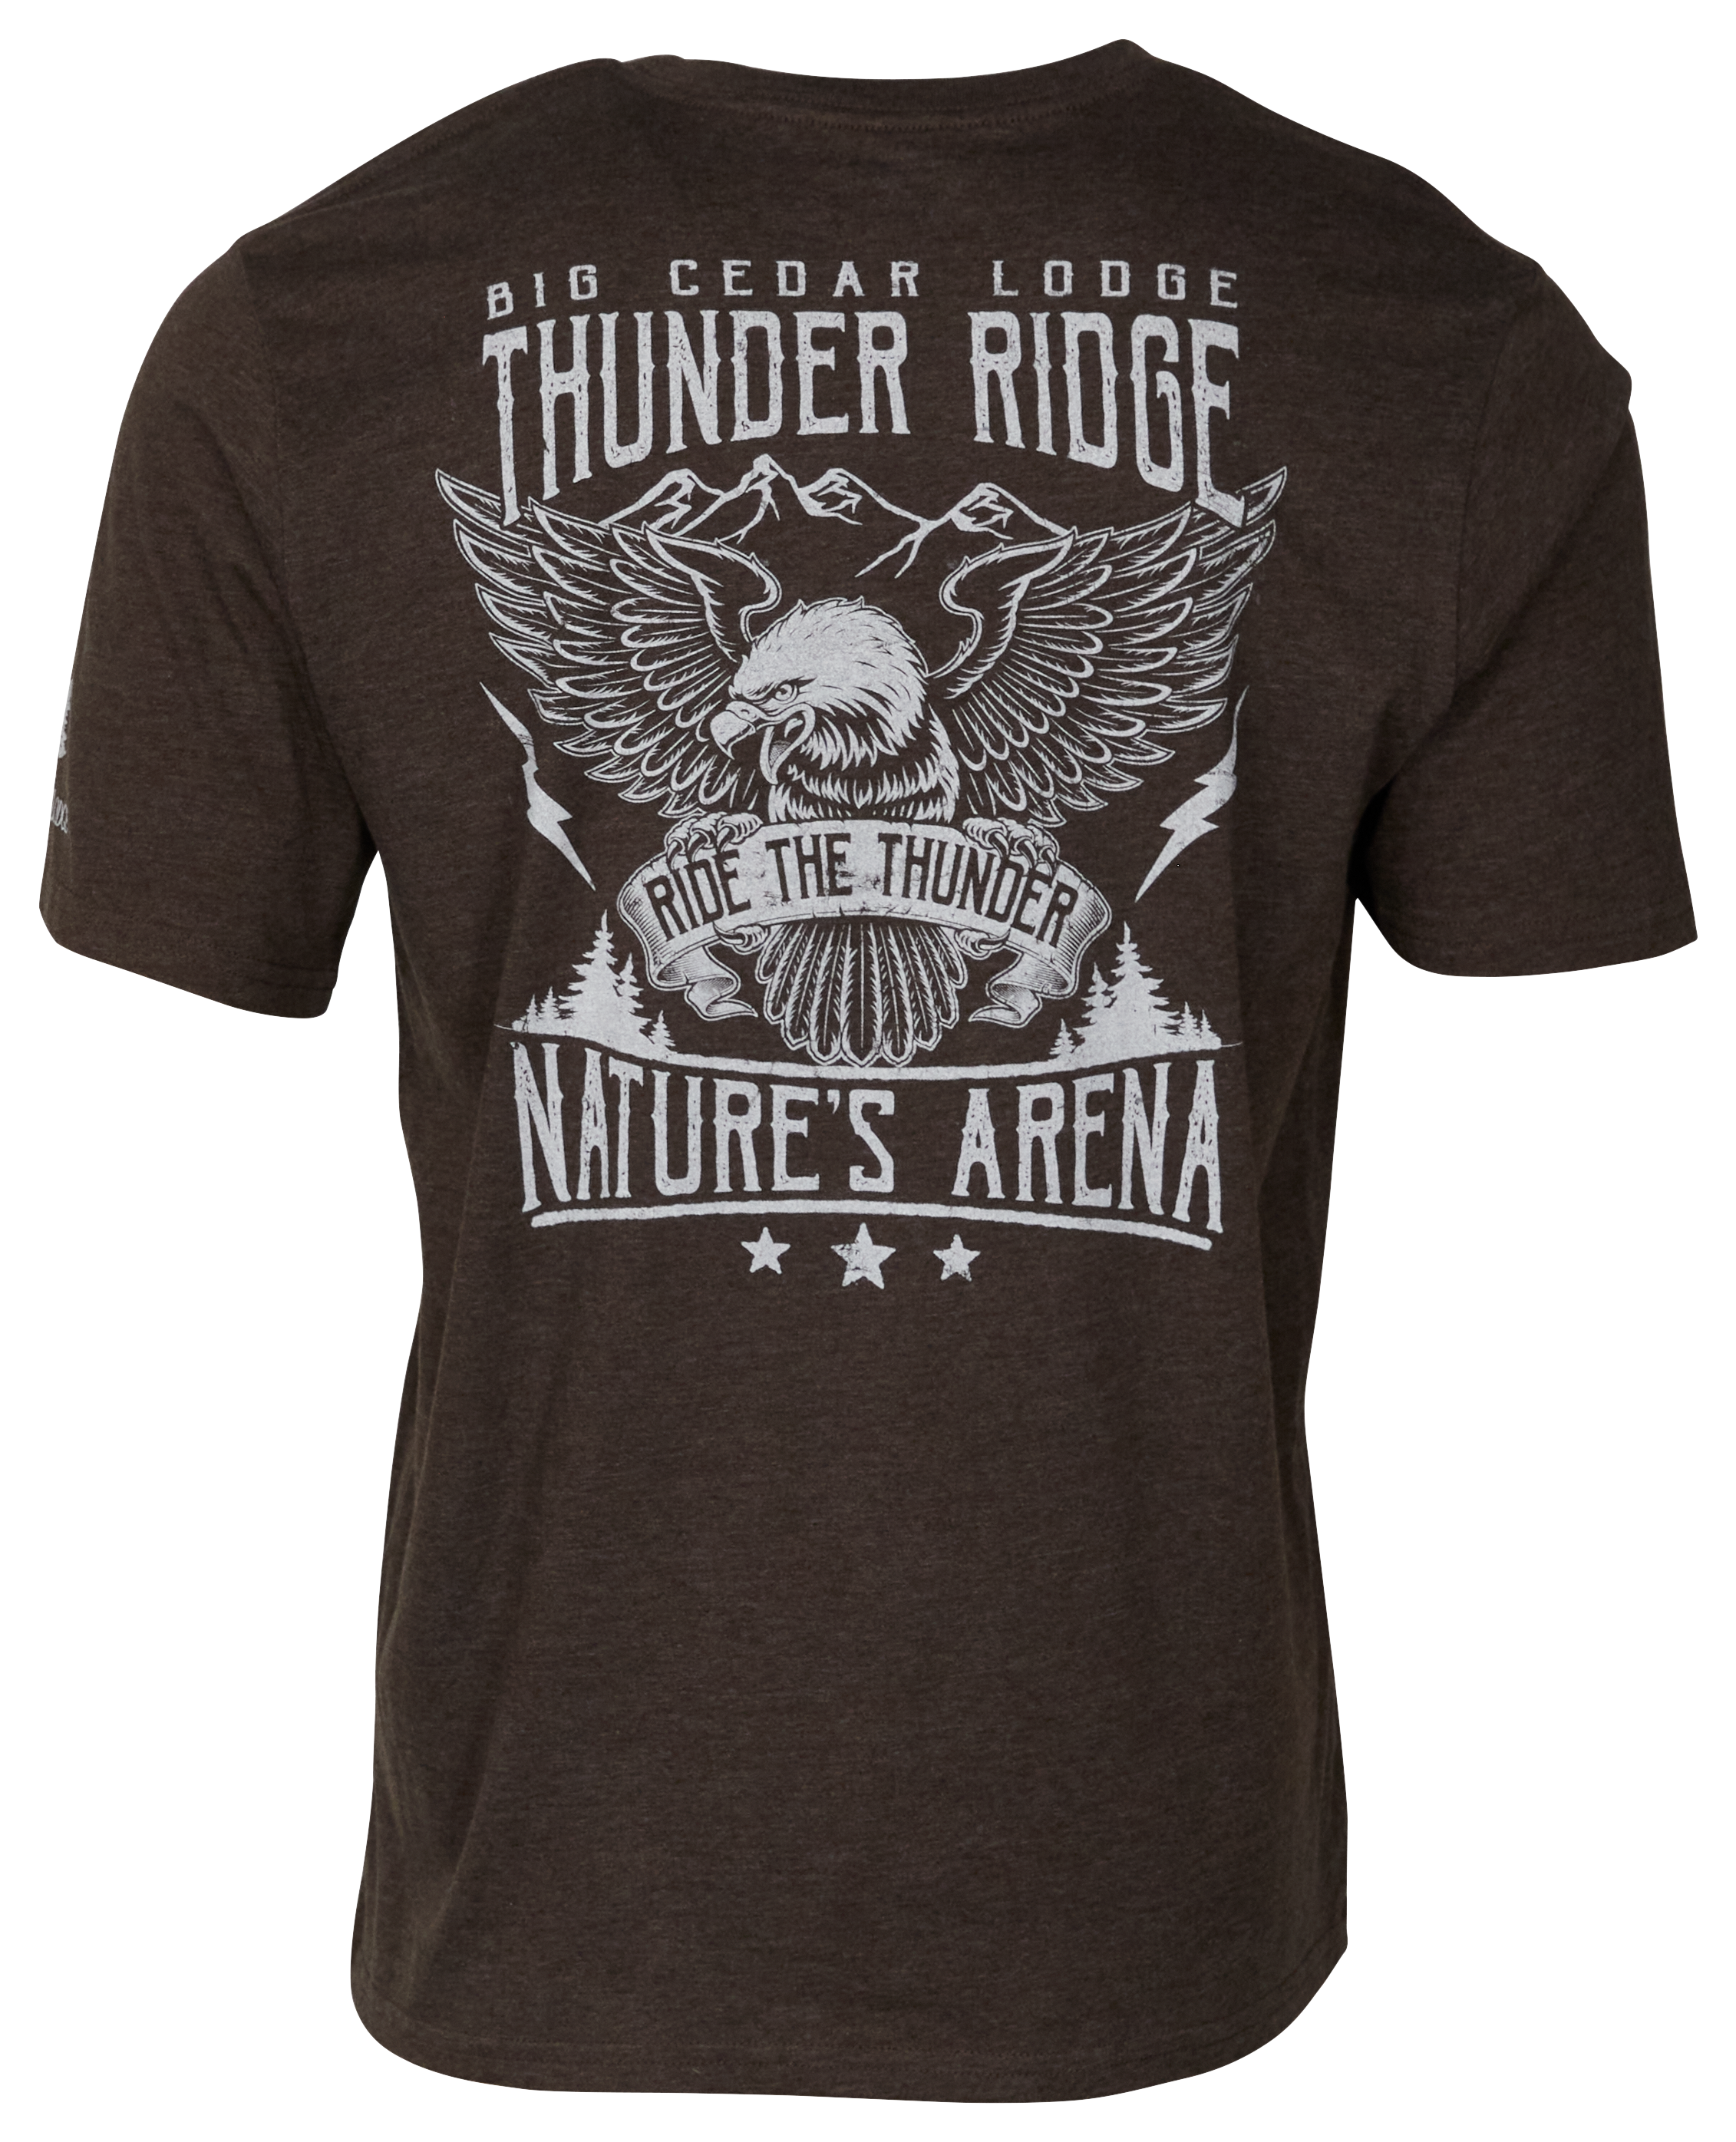 Bass Pro Shops Thunder Ridge Eagle Short-Sleeve T-Shirt for Men